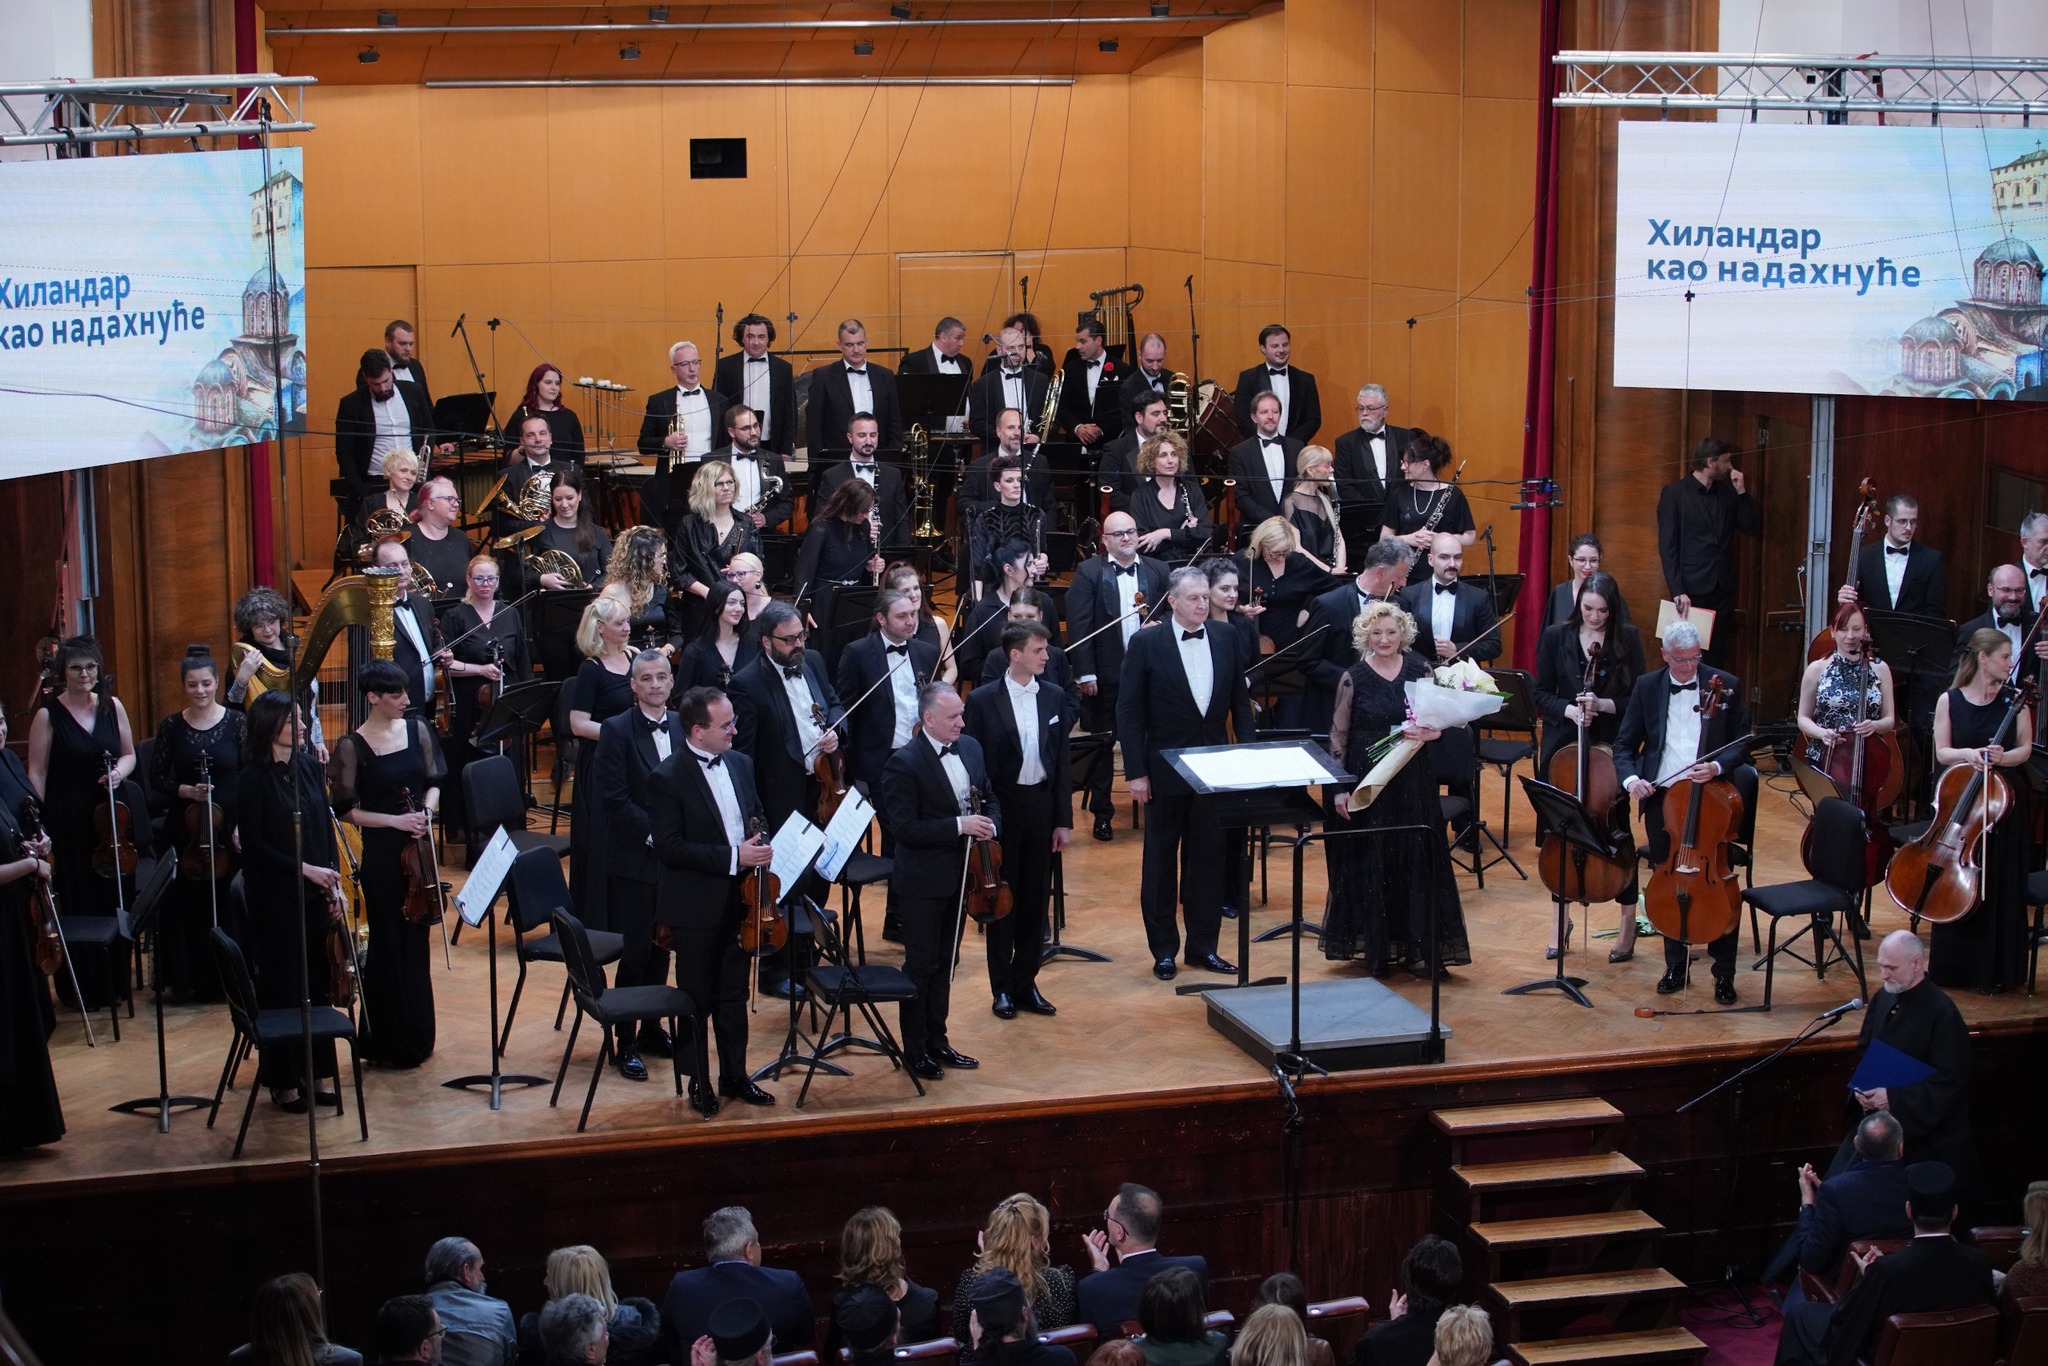 Концерт ,,Хиландар као надахнуће" изведен и пред београдском публиком